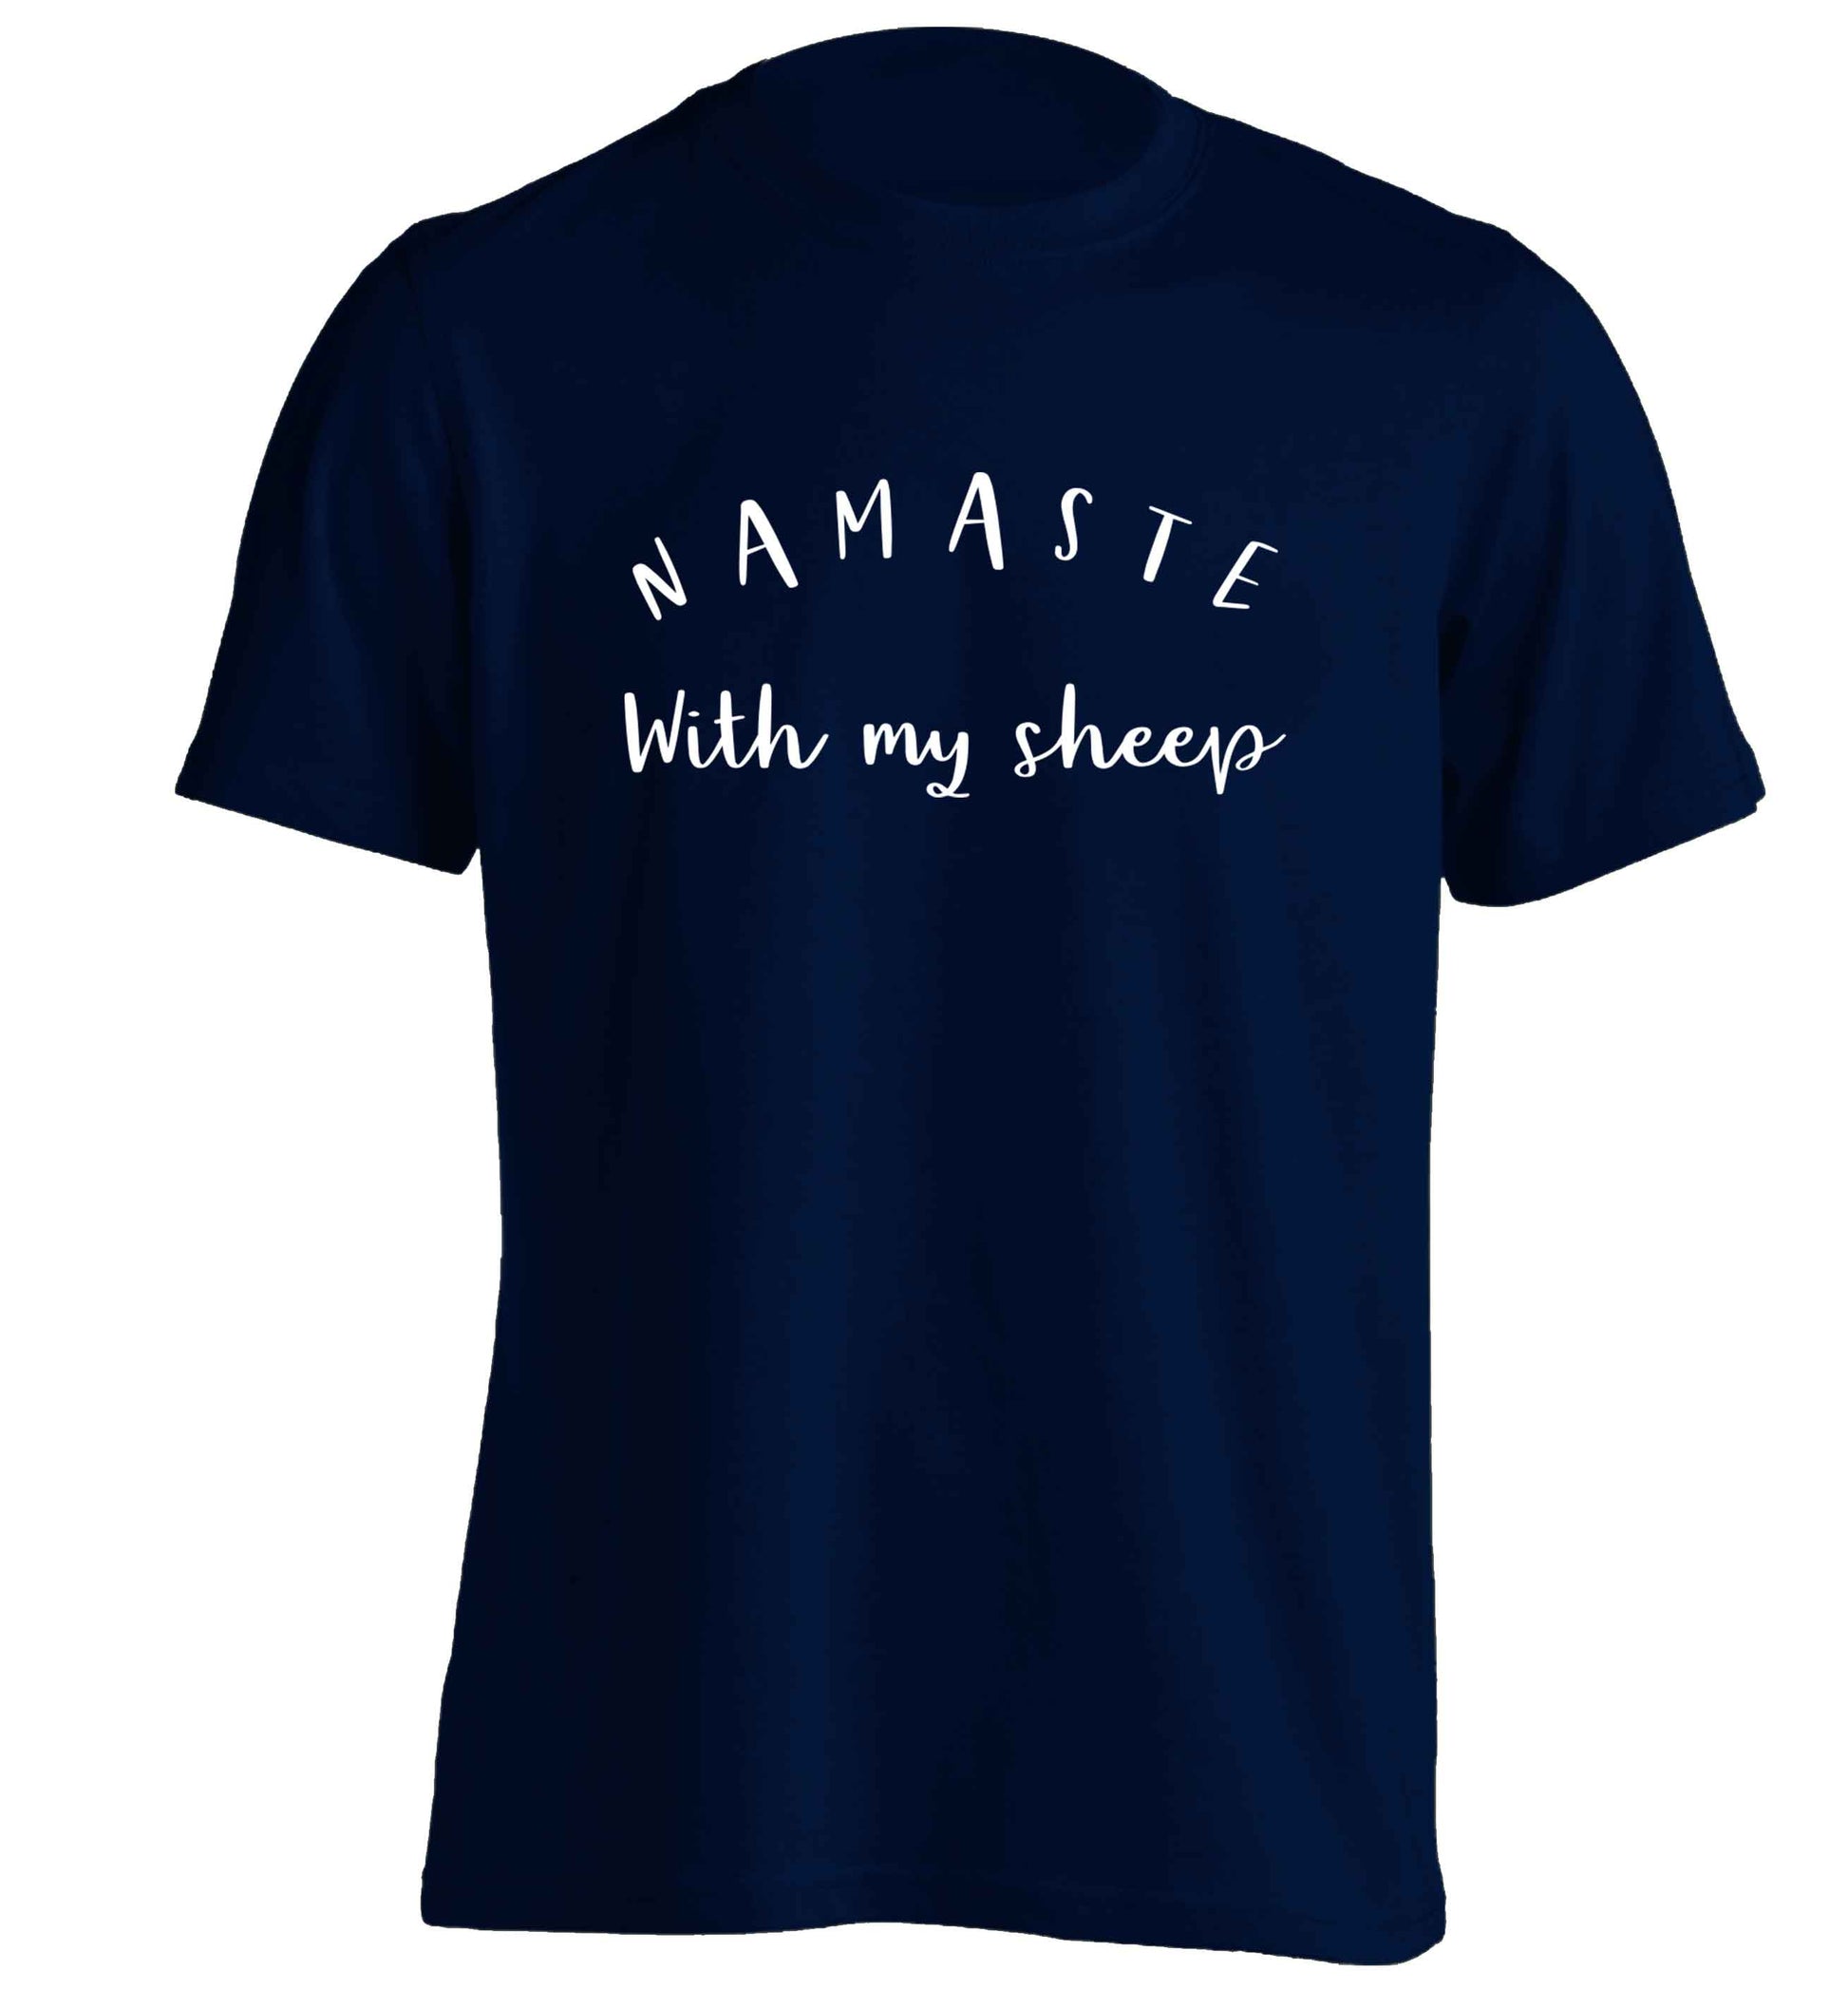 Namaste with my sheep adults unisex navy Tshirt 2XL